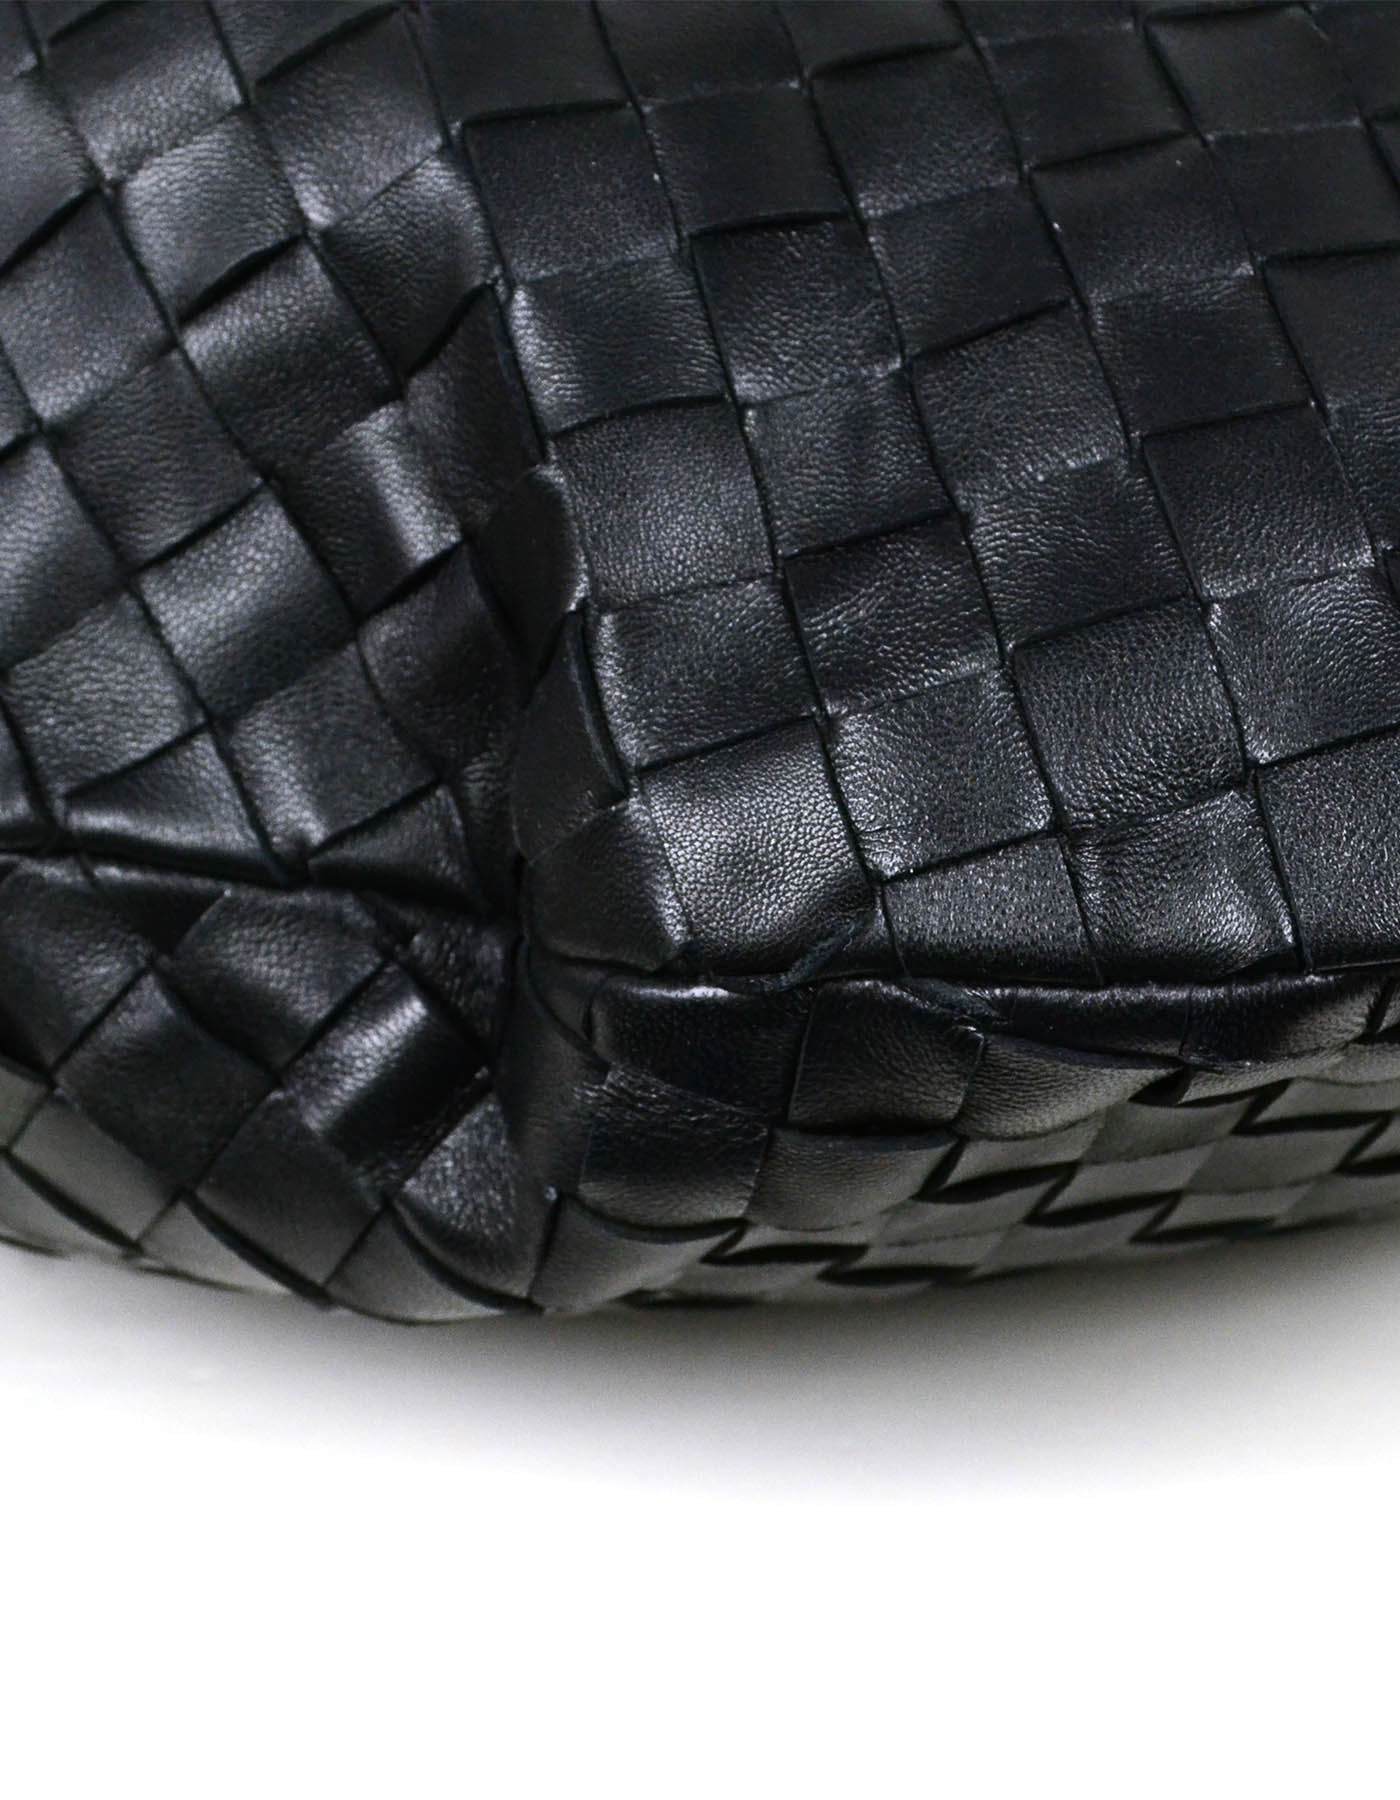 Bottega Veneta Black Leather Small Jodie Hobo Bag